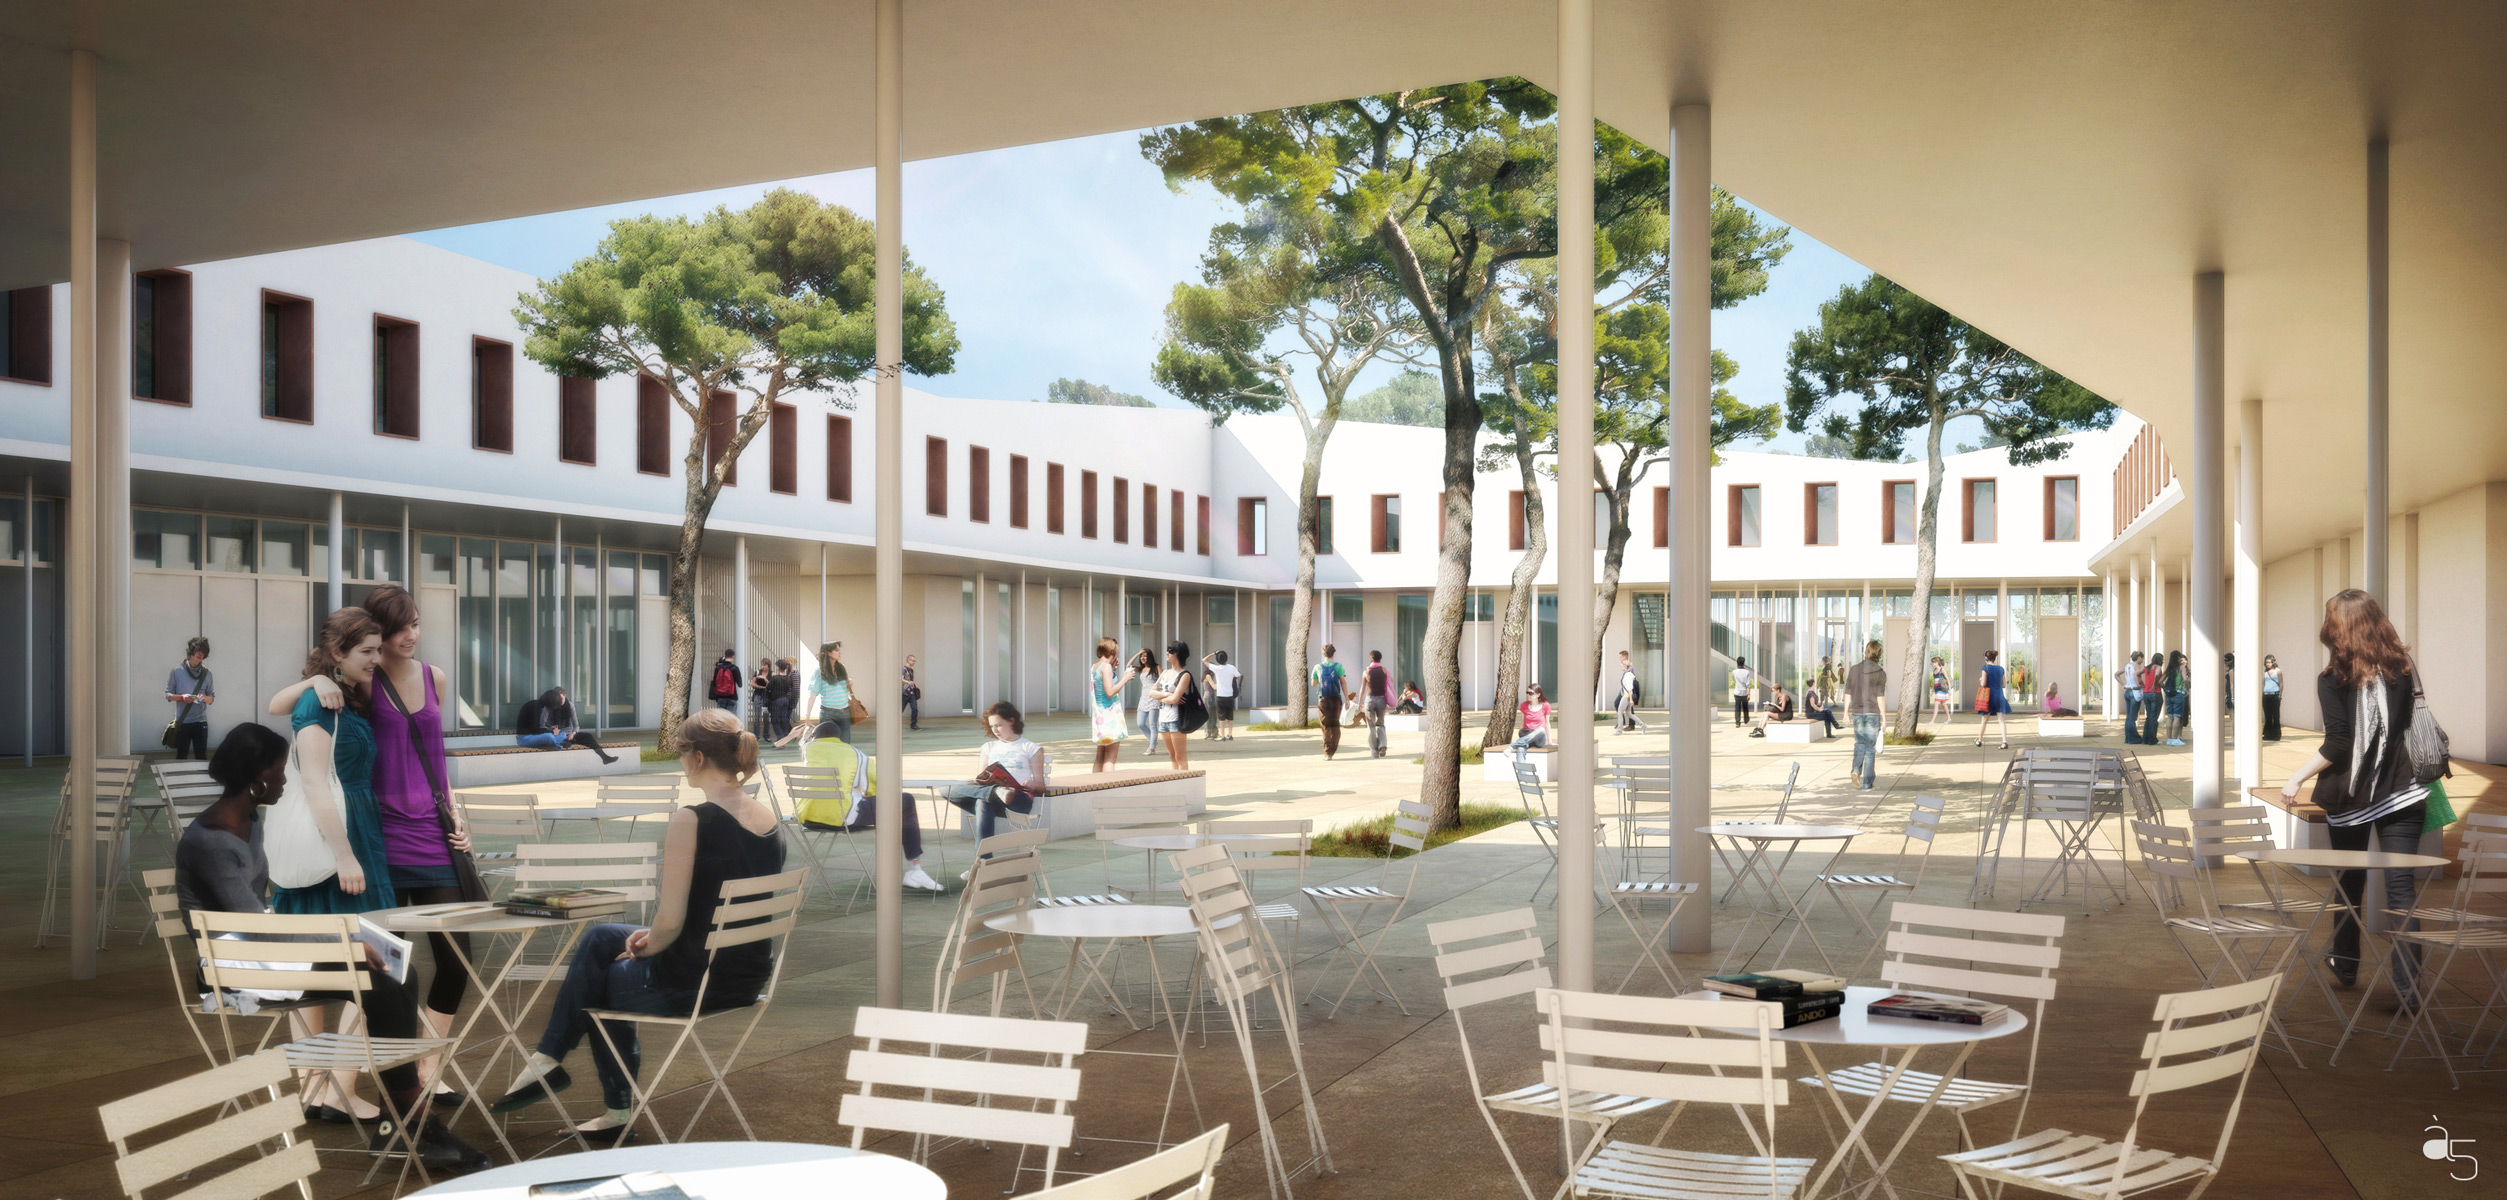 Lycée ERNEST FERROUL - Visuel 3-3dvisualization-cgi-archiviz-cgarchitect-architecture-renderviz